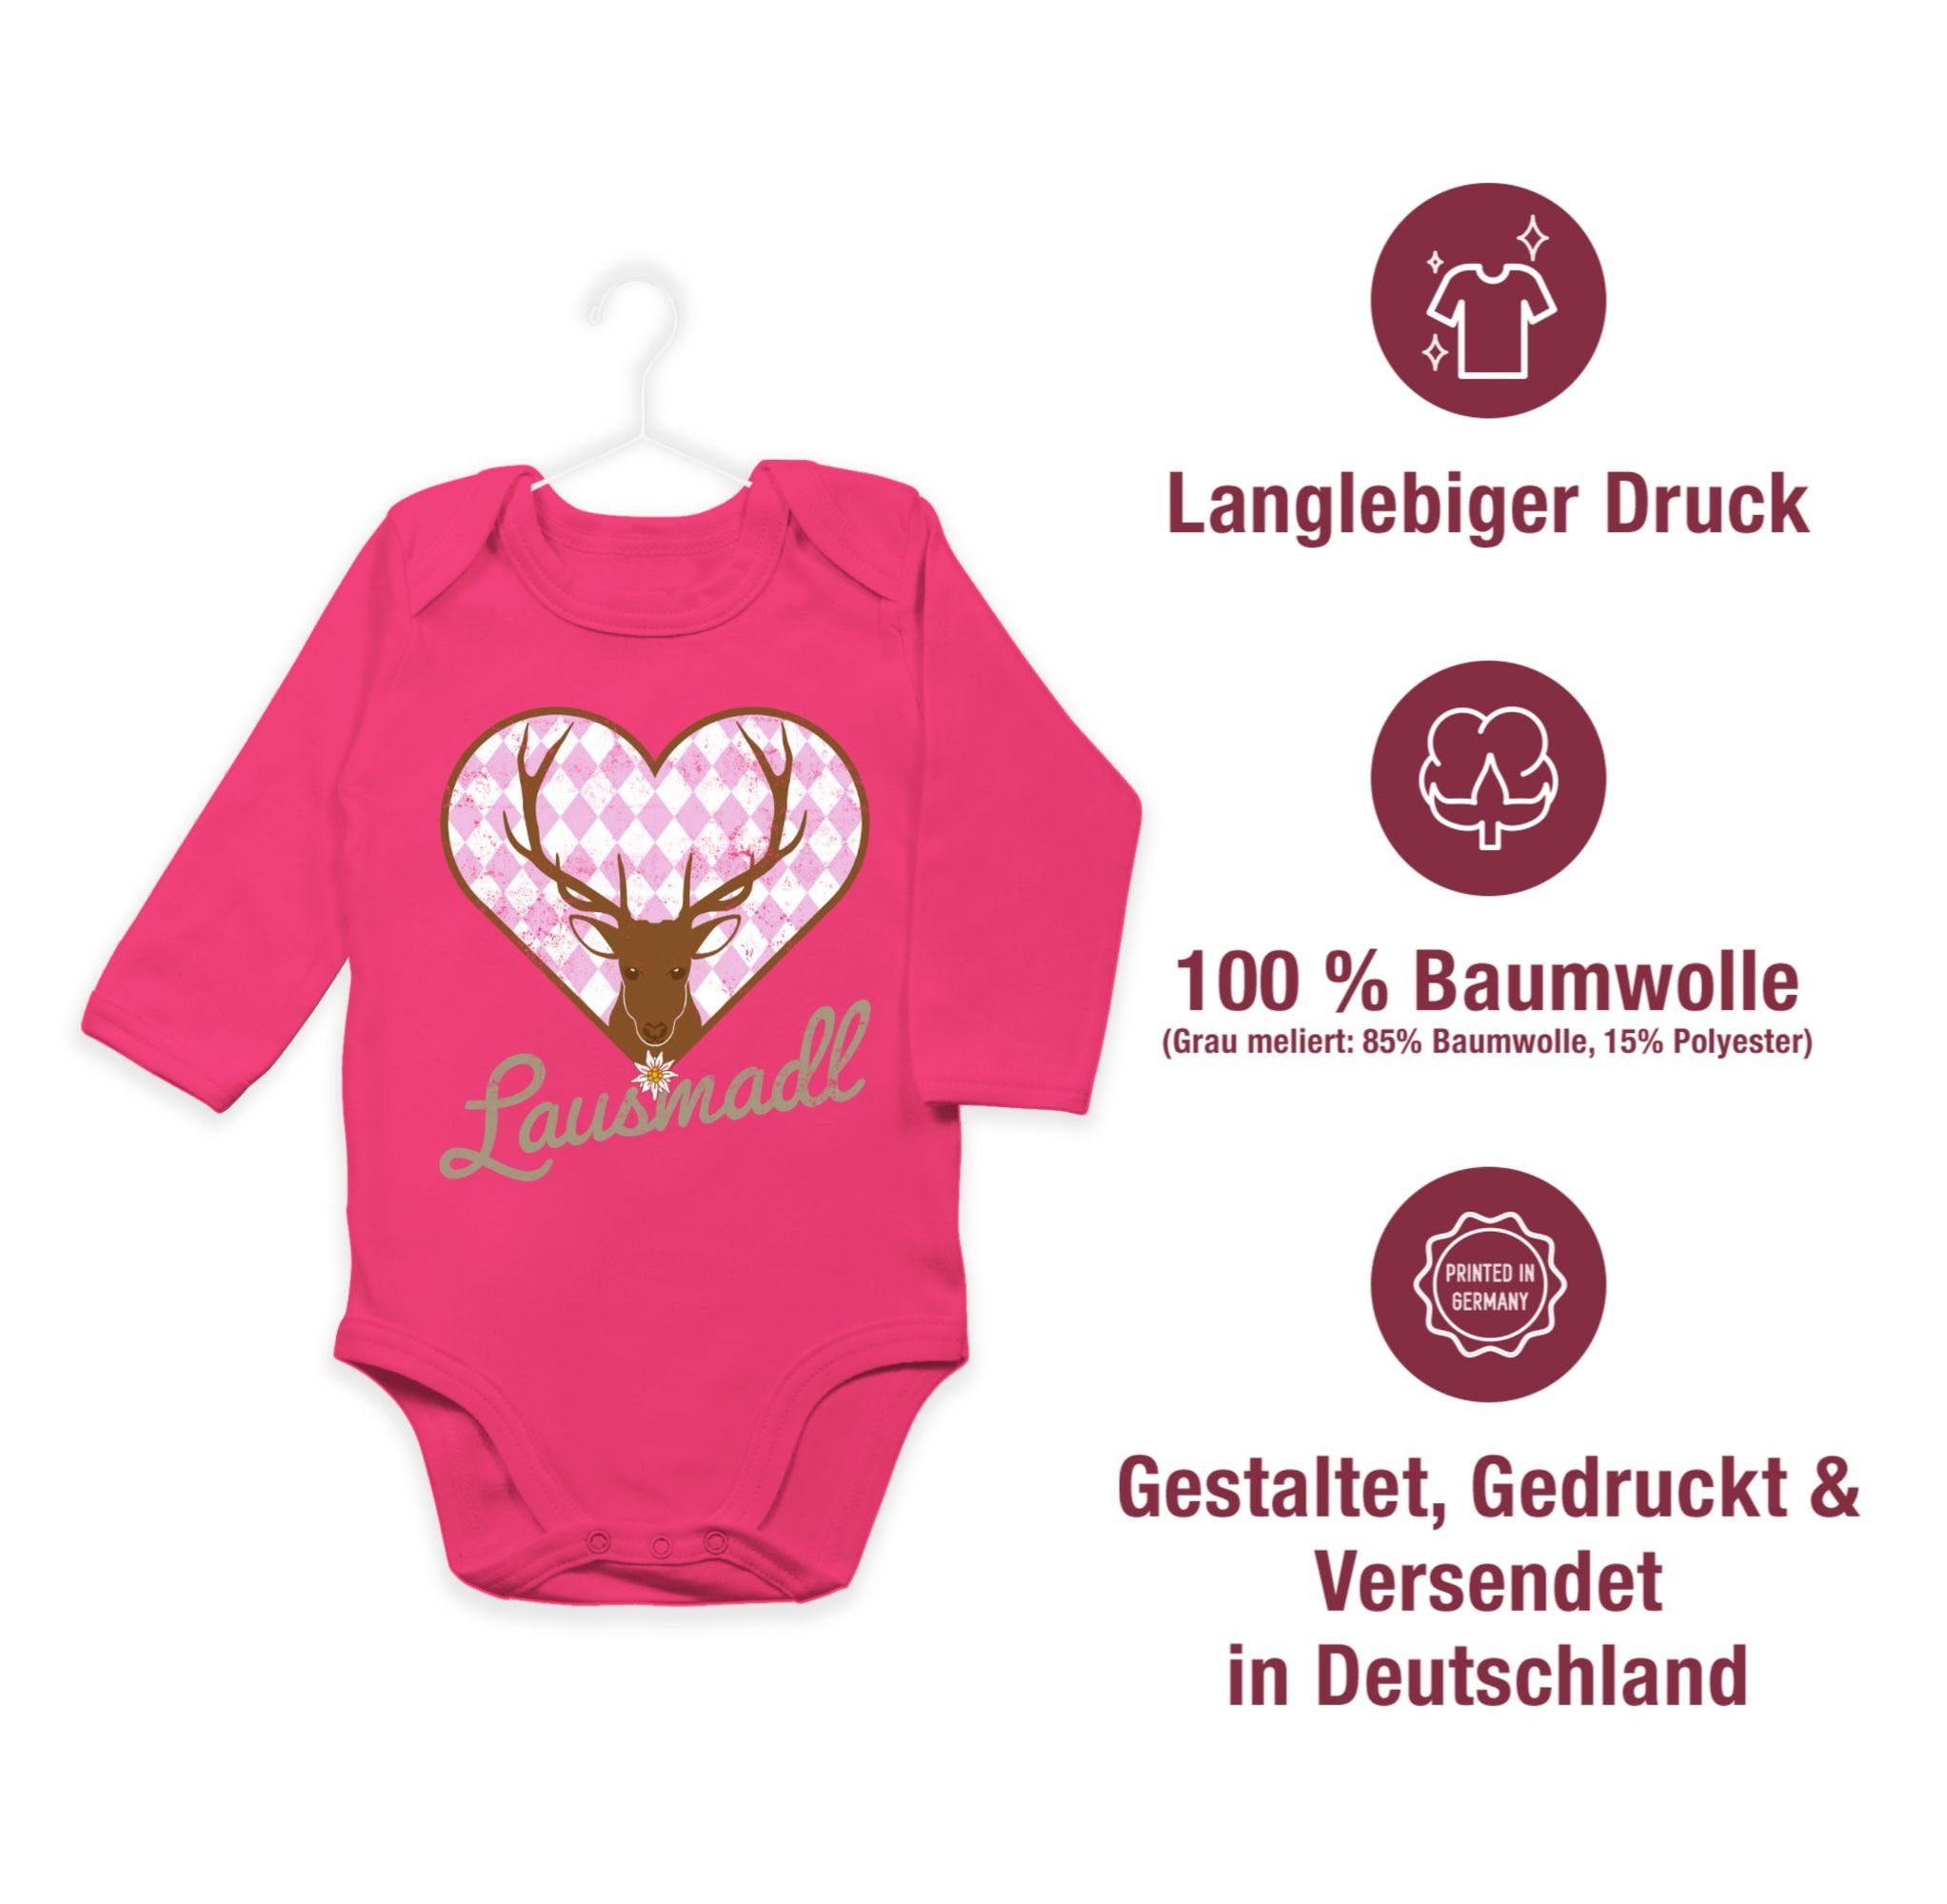 Lausmadl Baby Shirtracer Fuchsia Hirsch Shirtbody für 2 Oktoberfest Mode Outfit